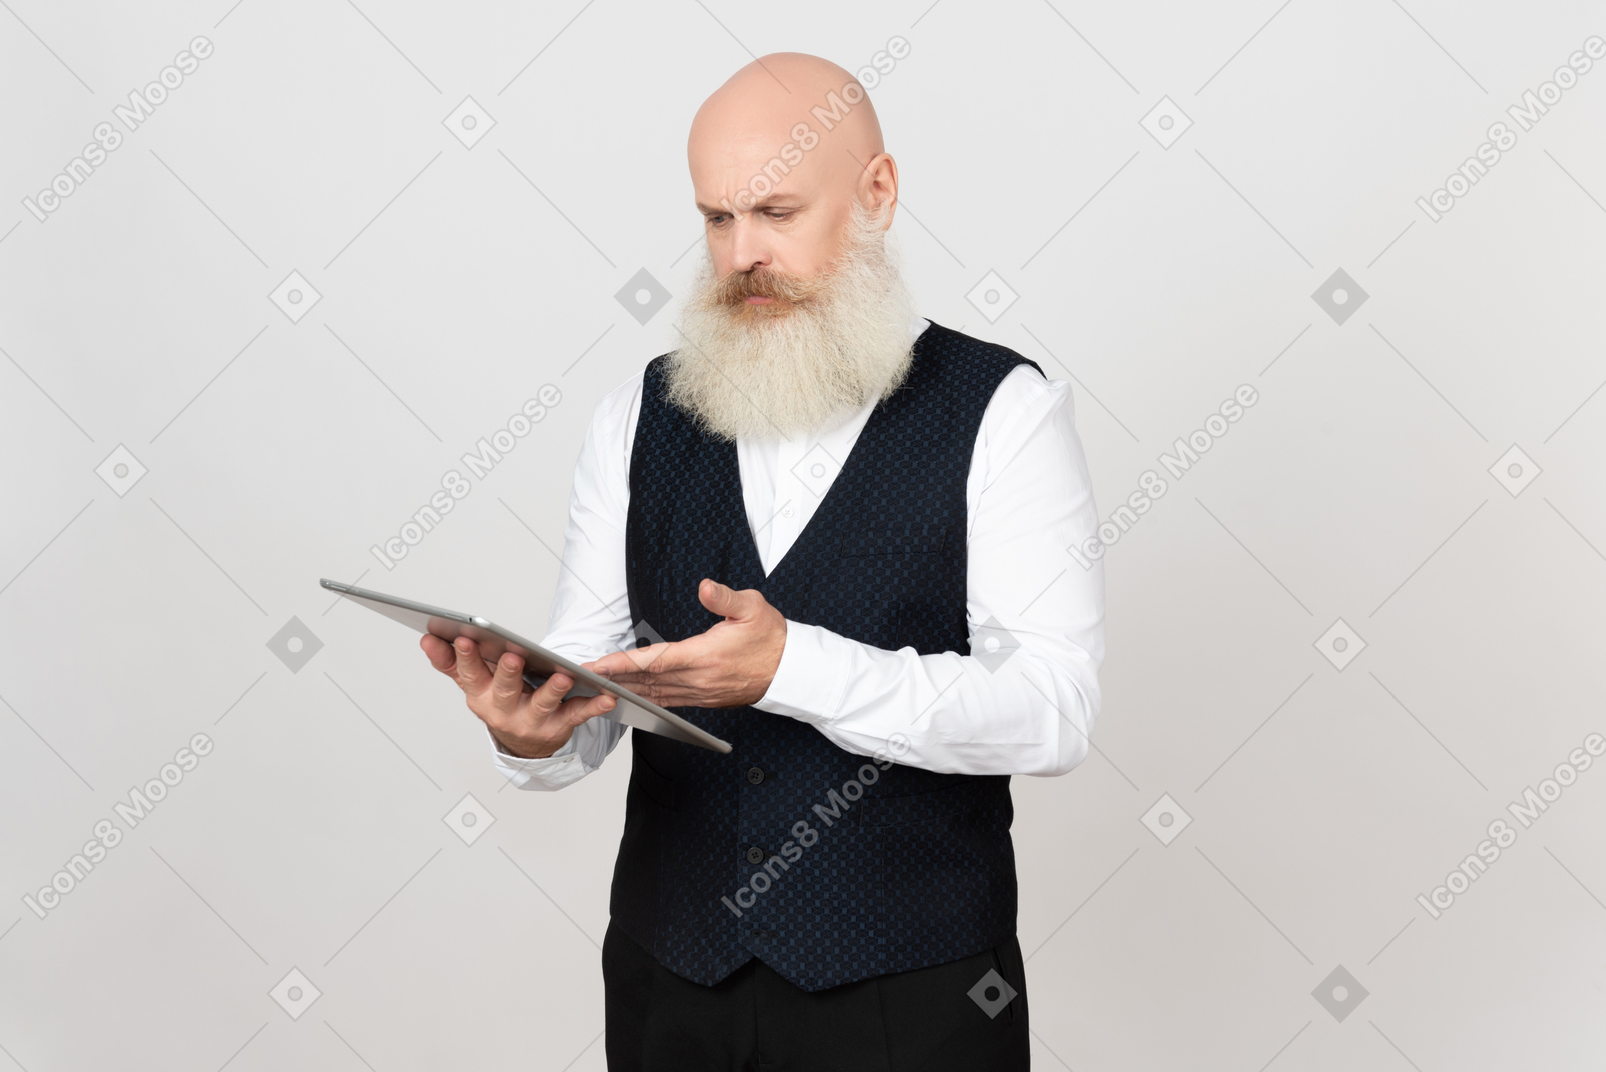 Aged man centred on using ipad